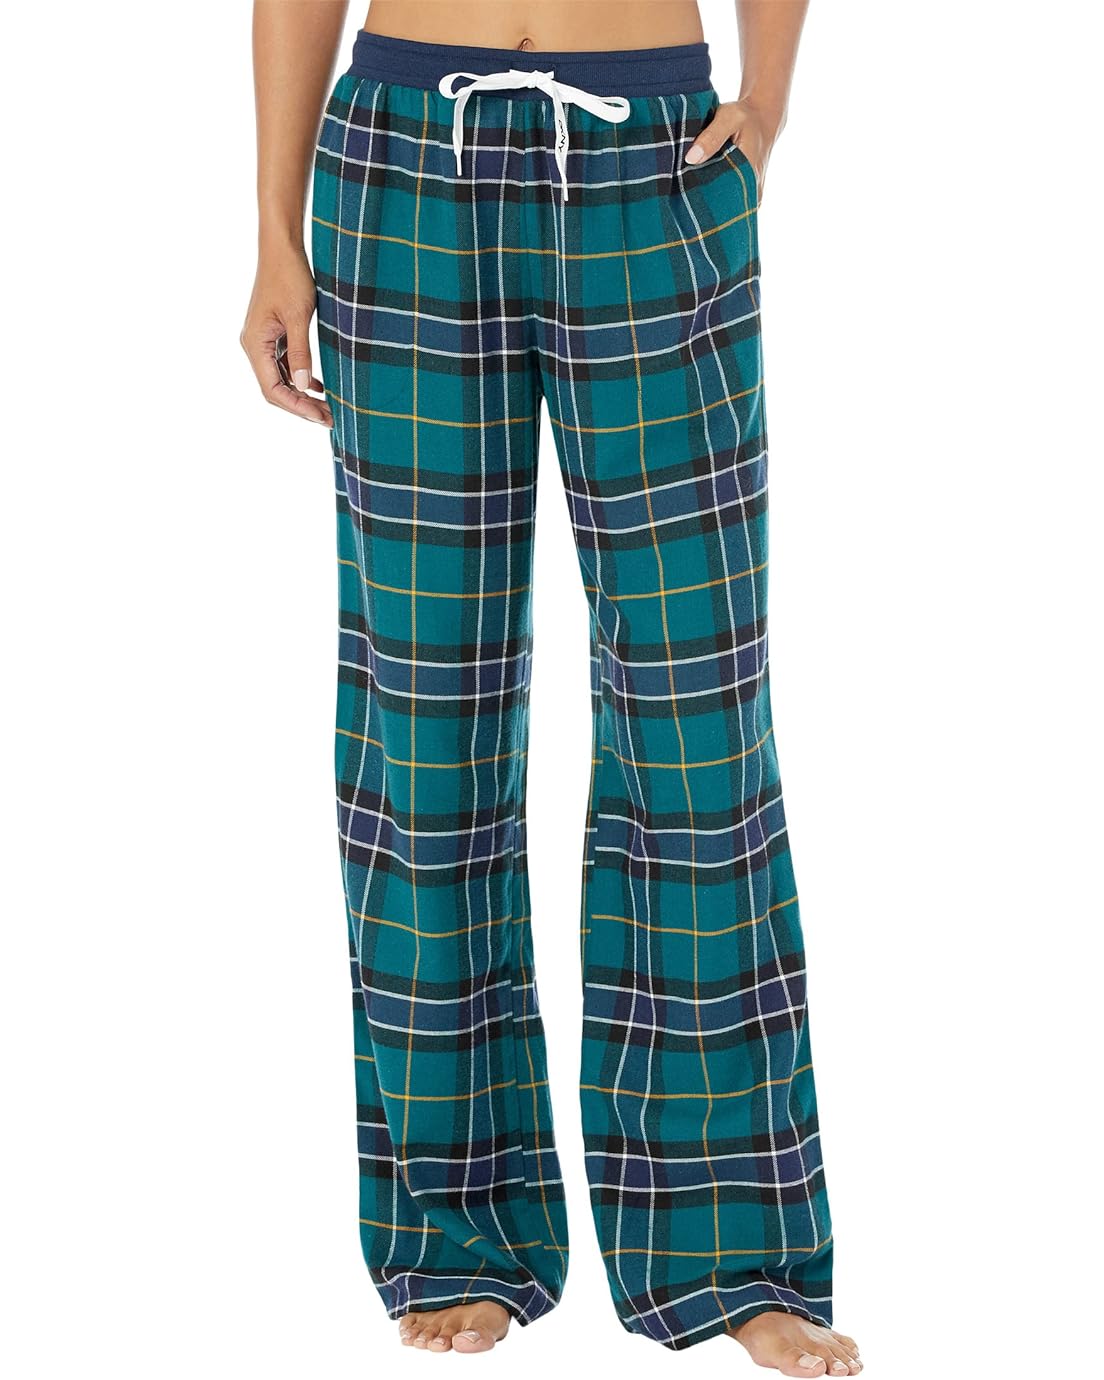 DKNY Flannel Sleep Pants